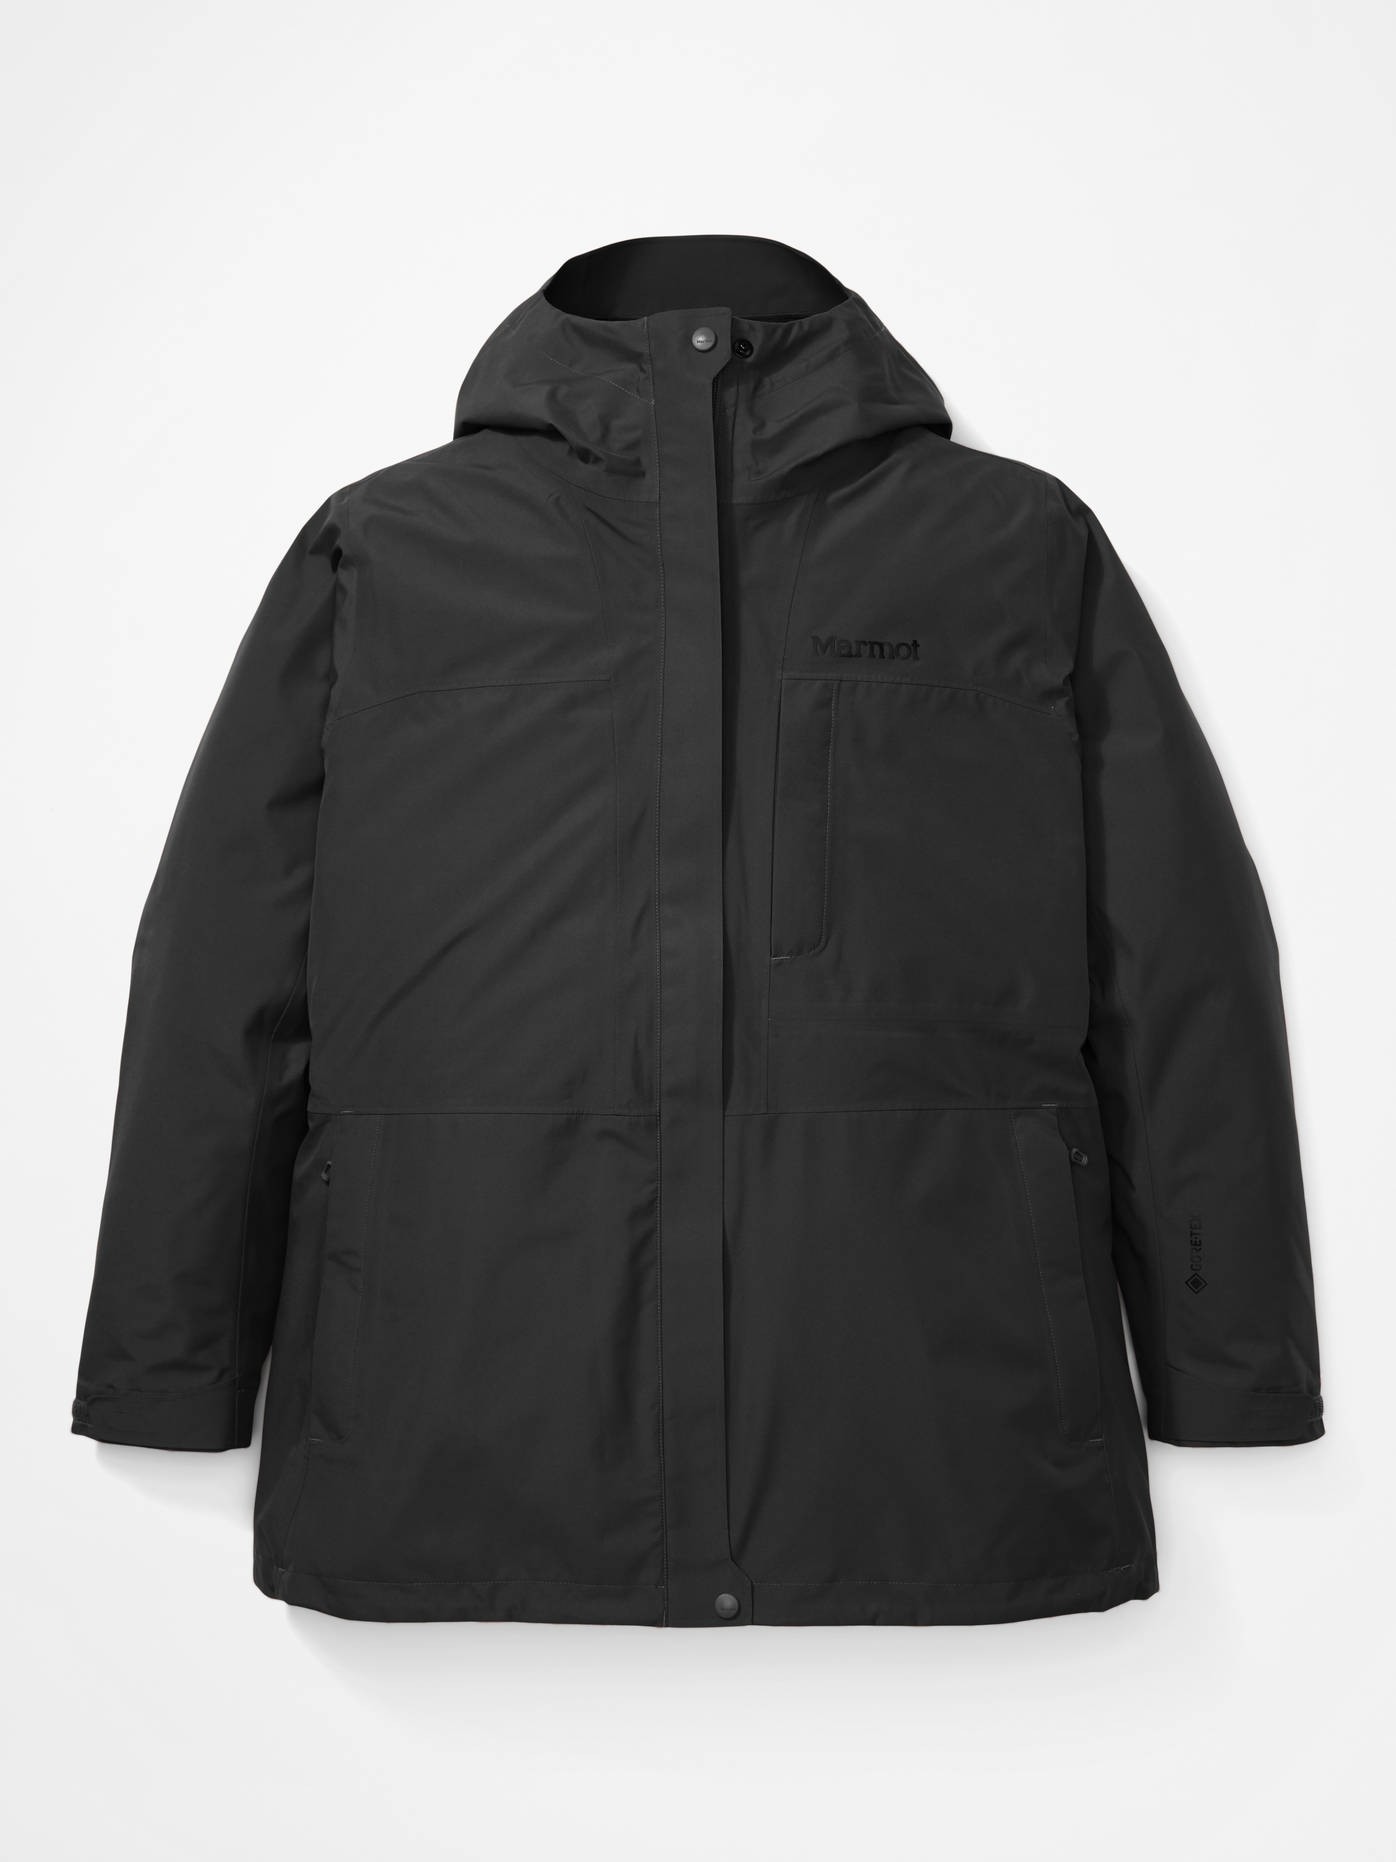 Minimalist Component GTX Plus Jacket Wm, black